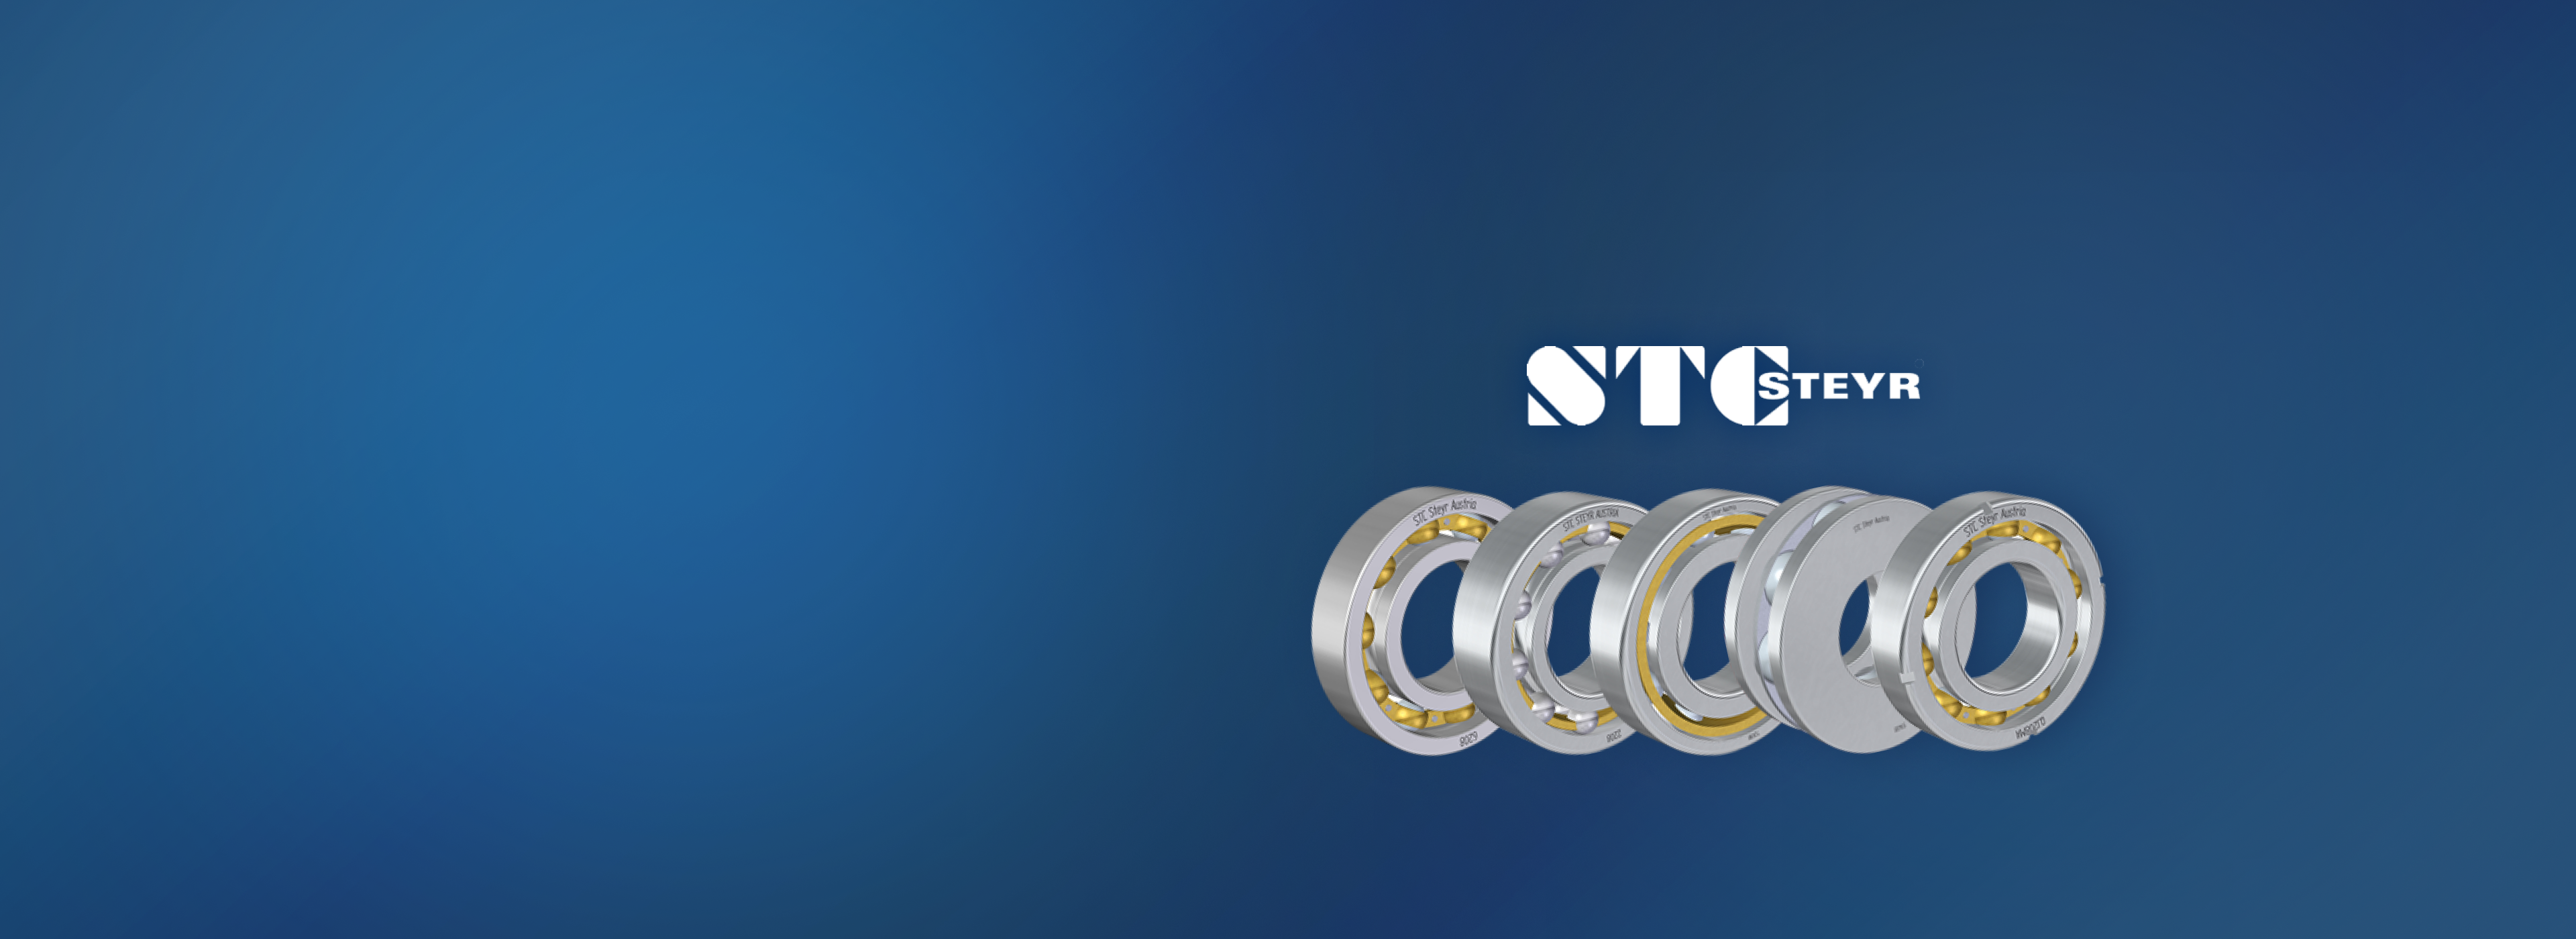 STC Steyr